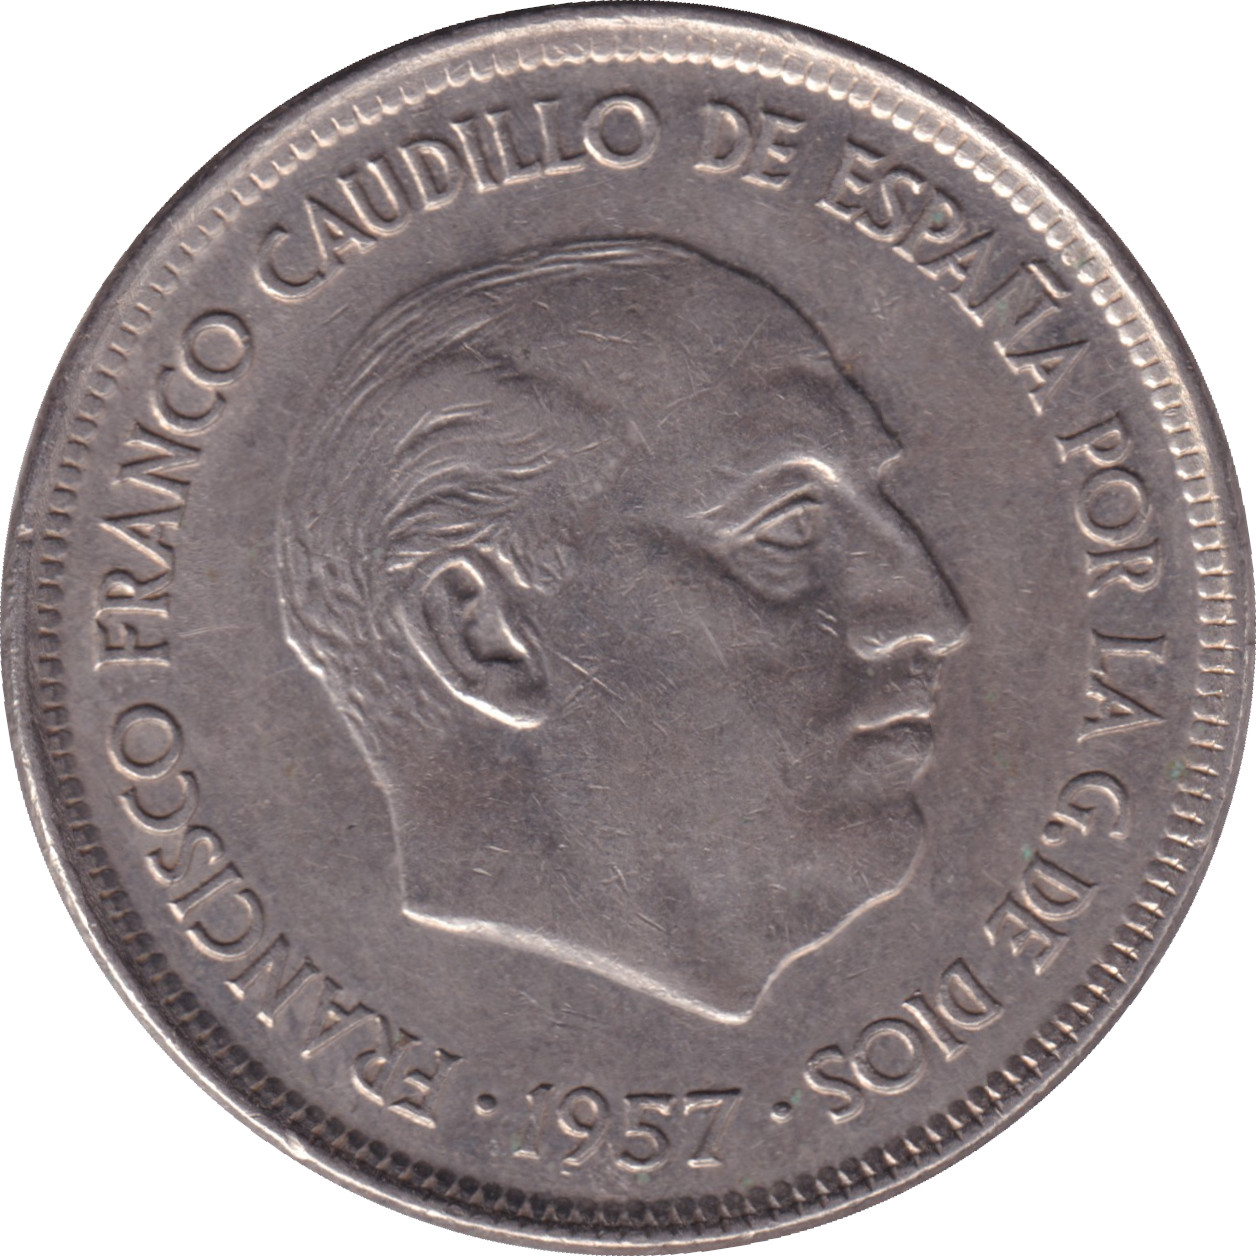 25 pesetas - Franco